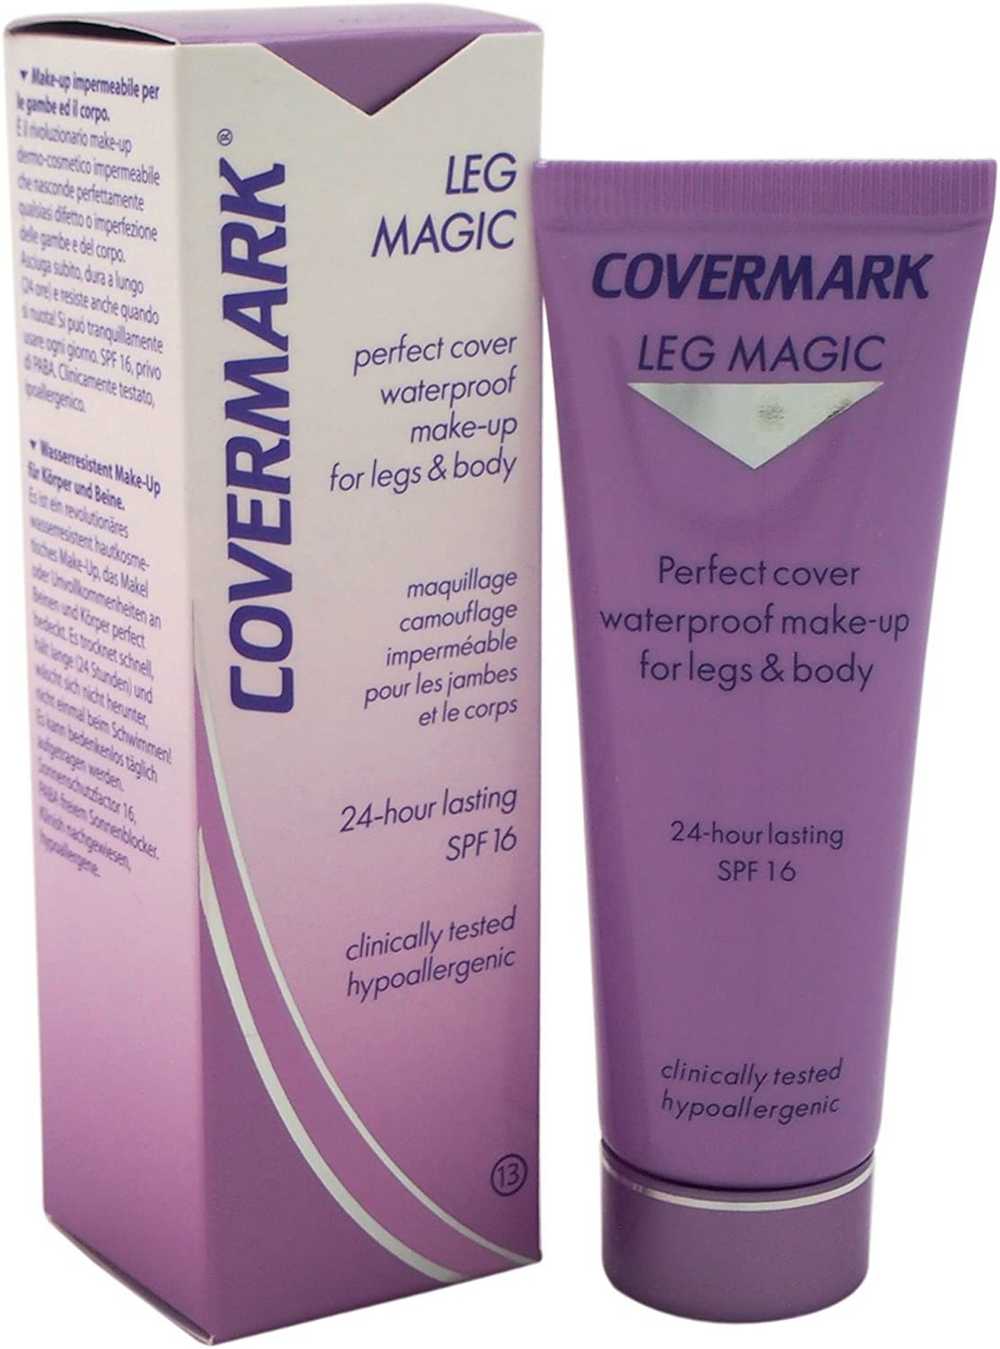 maquillaje-para-piernas-covermark-leg-magic.jpg